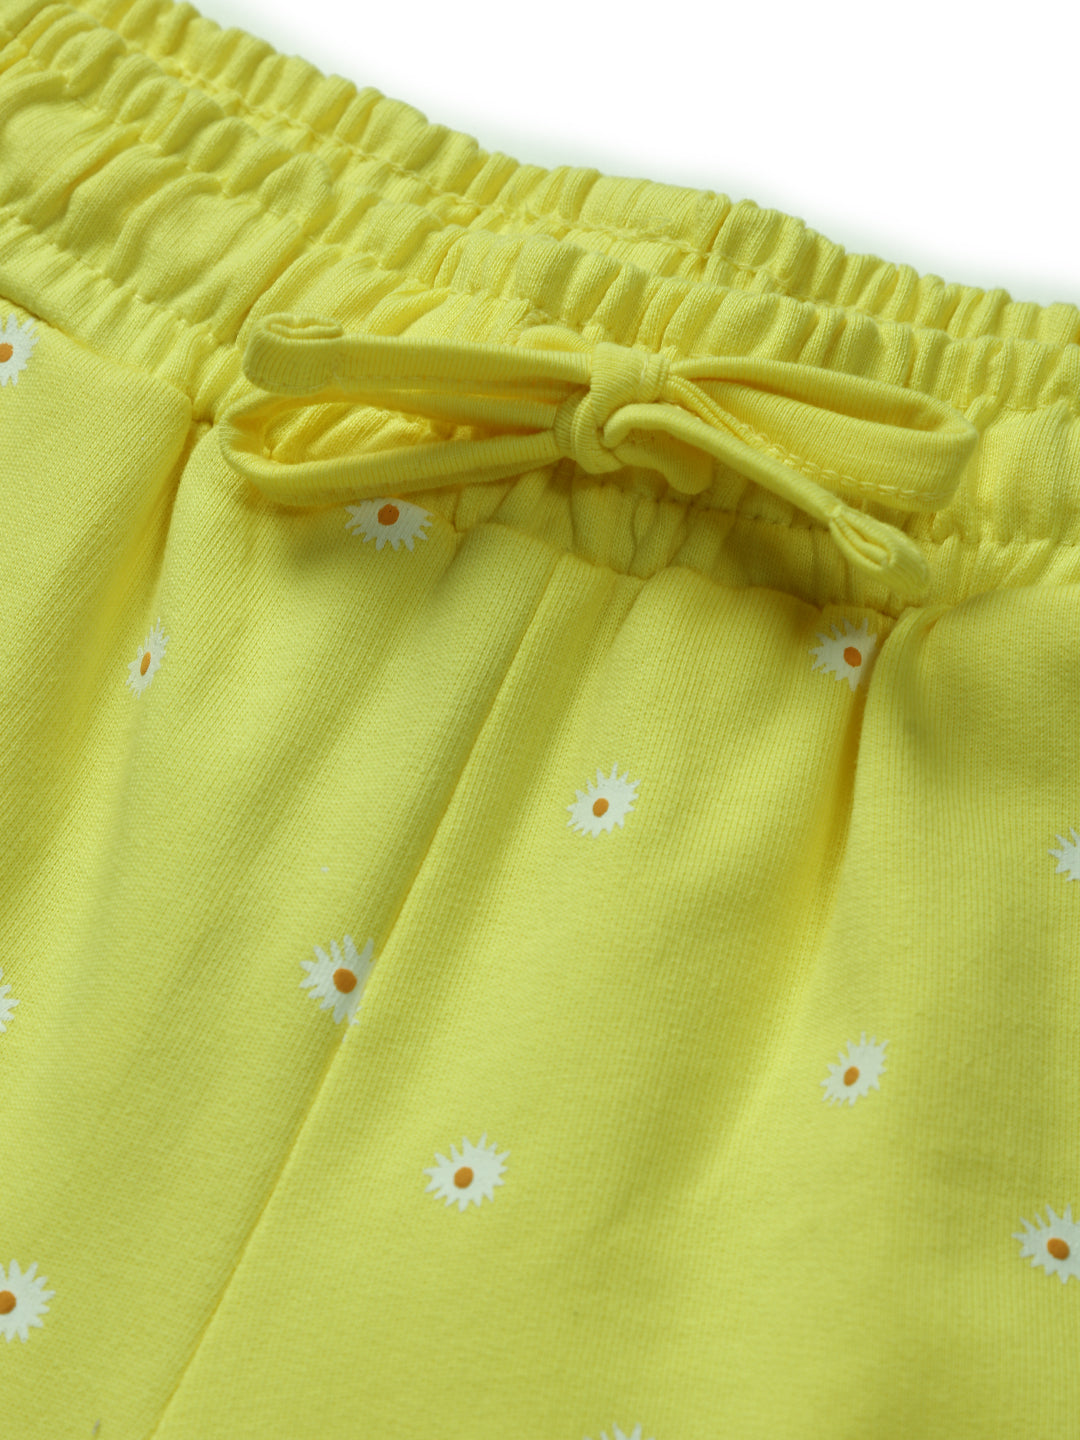 Girls Yellow Printed Knits Shorts